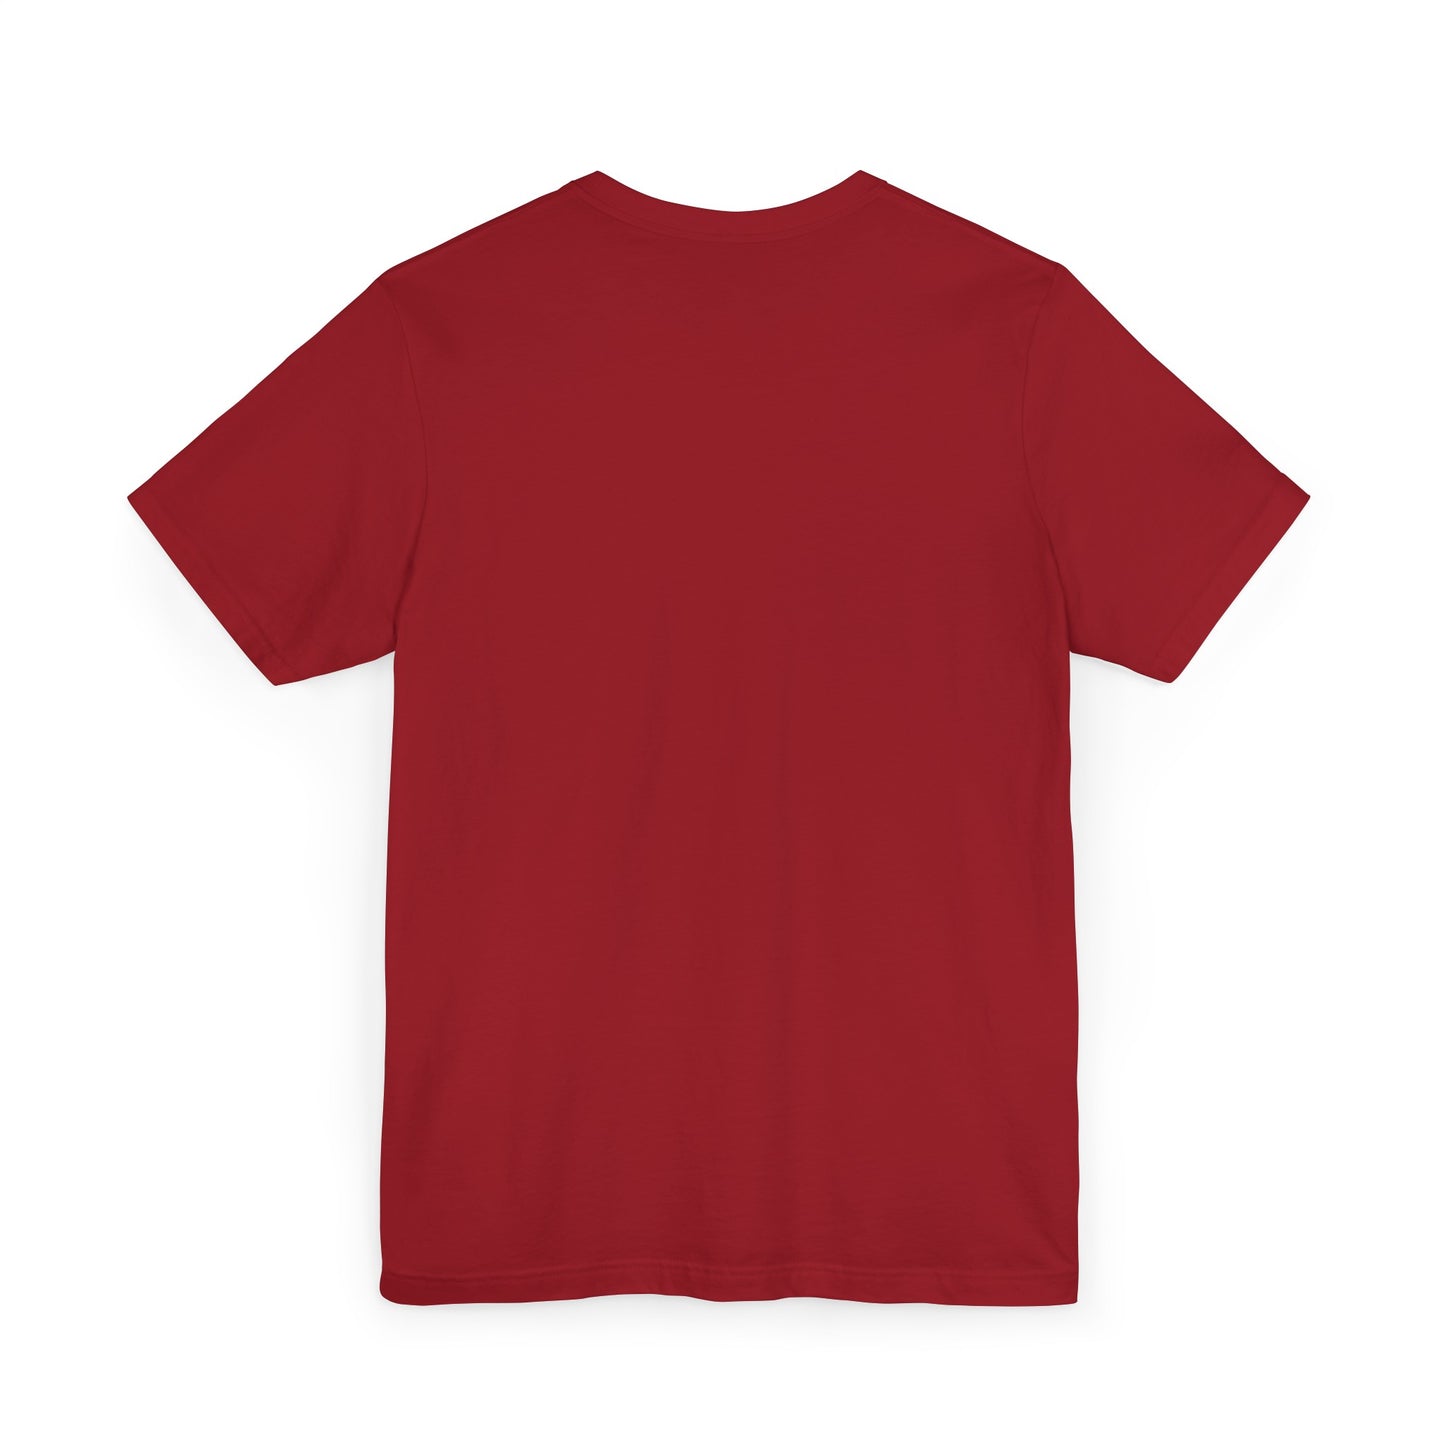 The Kiki Renee Unisex Jersey T-Shirt